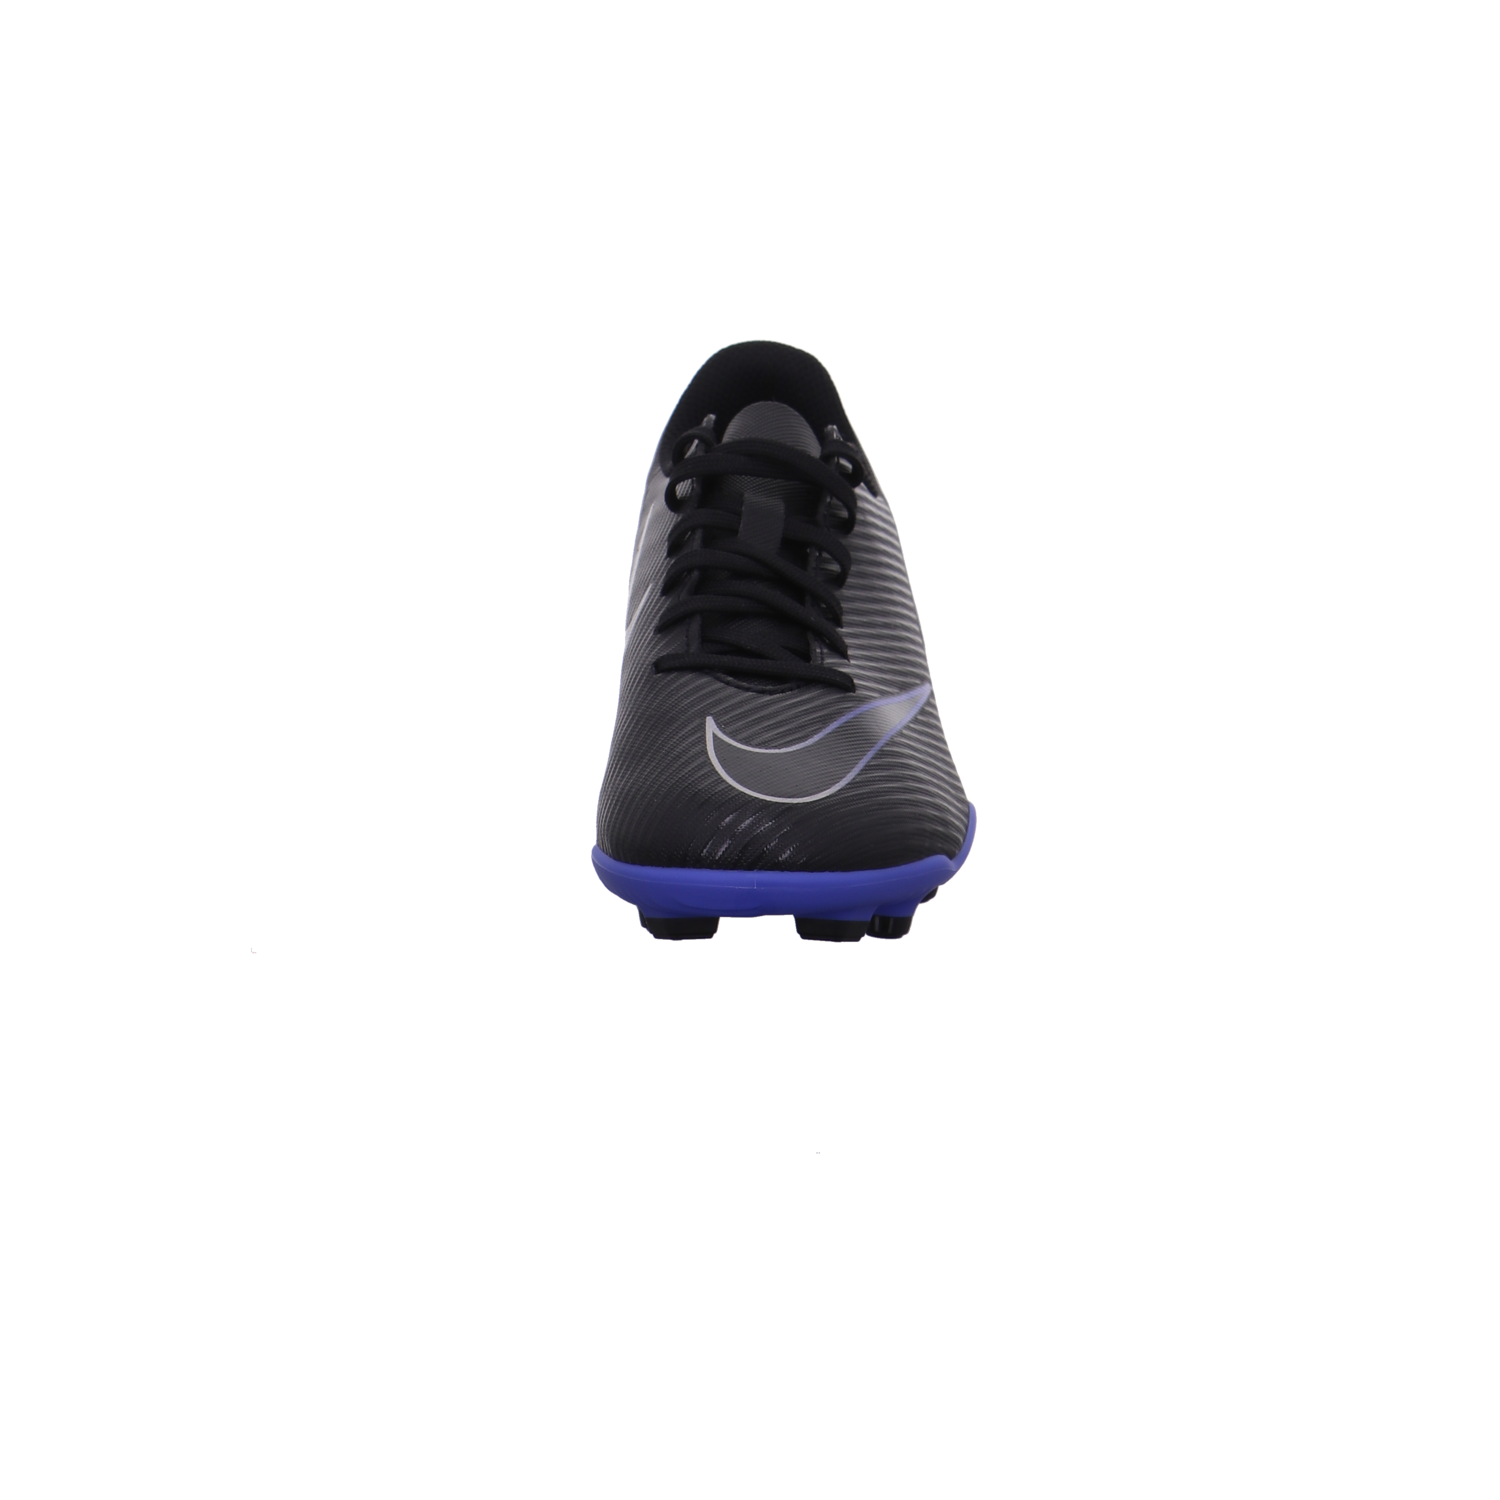 Nike Fußballschuhe schwarz kombi Bild3